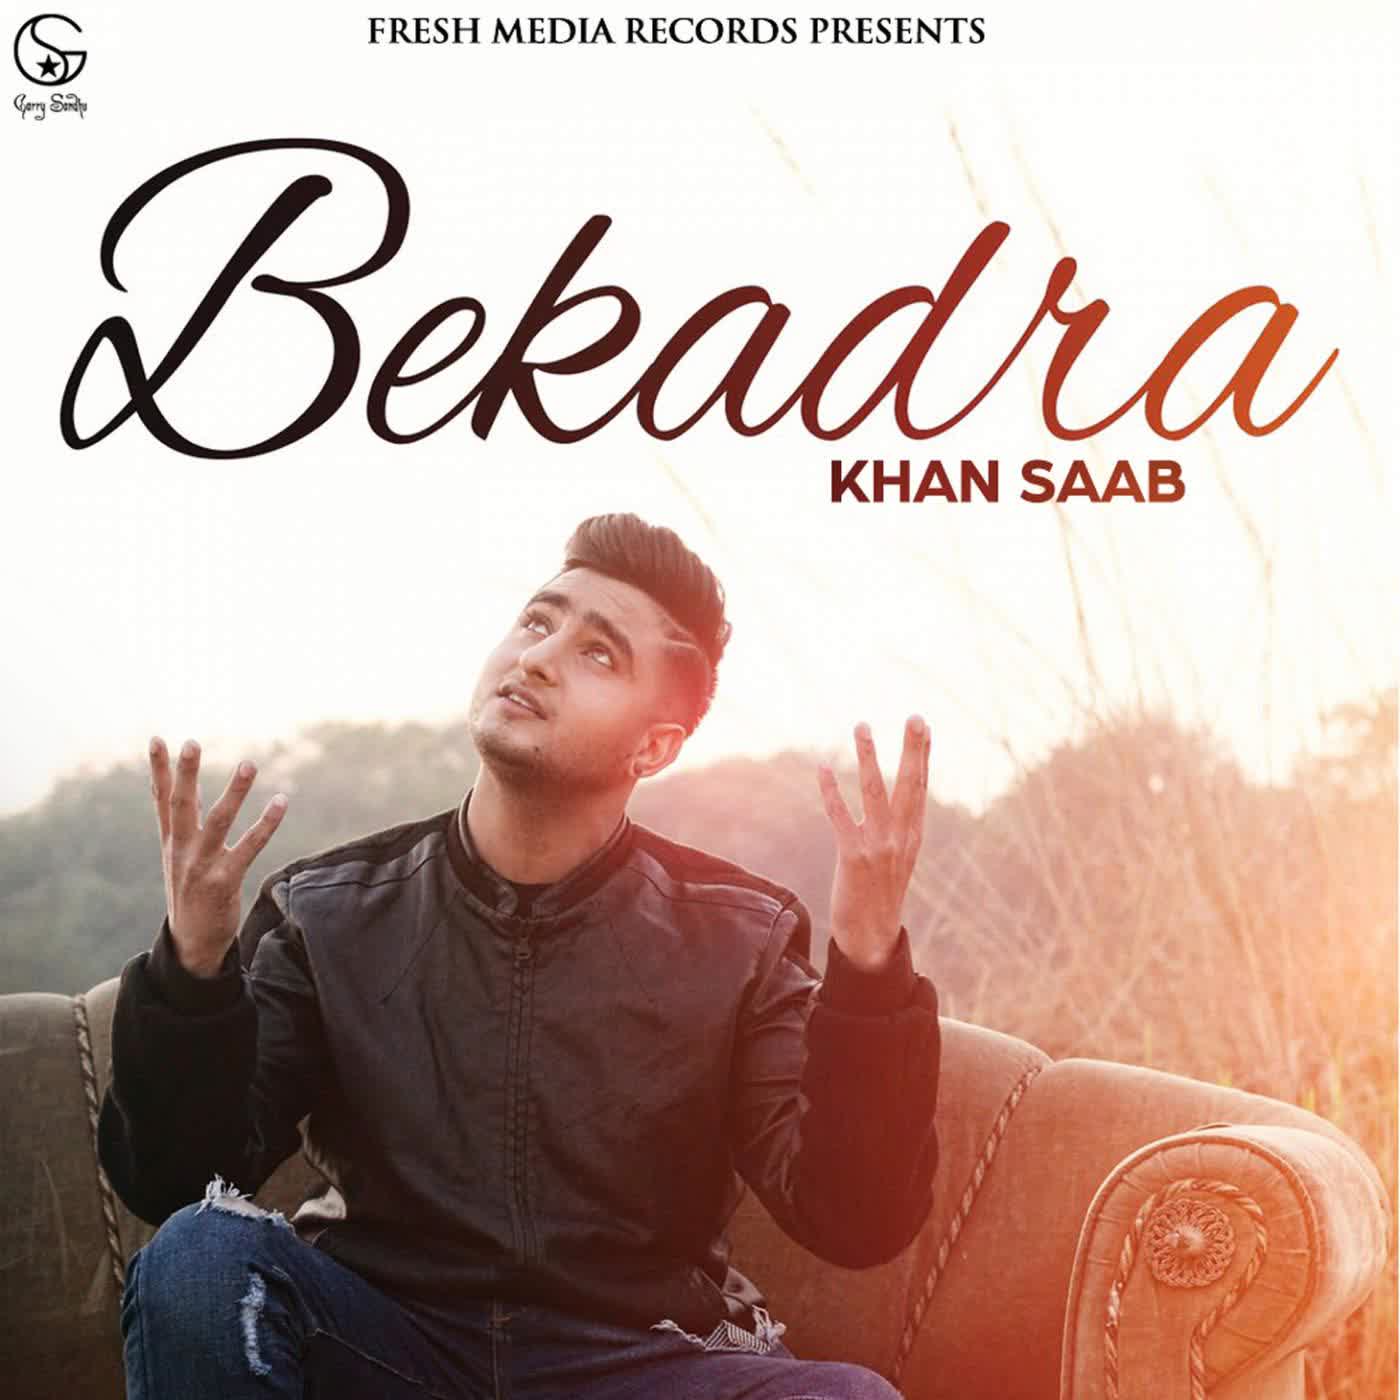 Bekadra Khan Saab  Mp3 song download